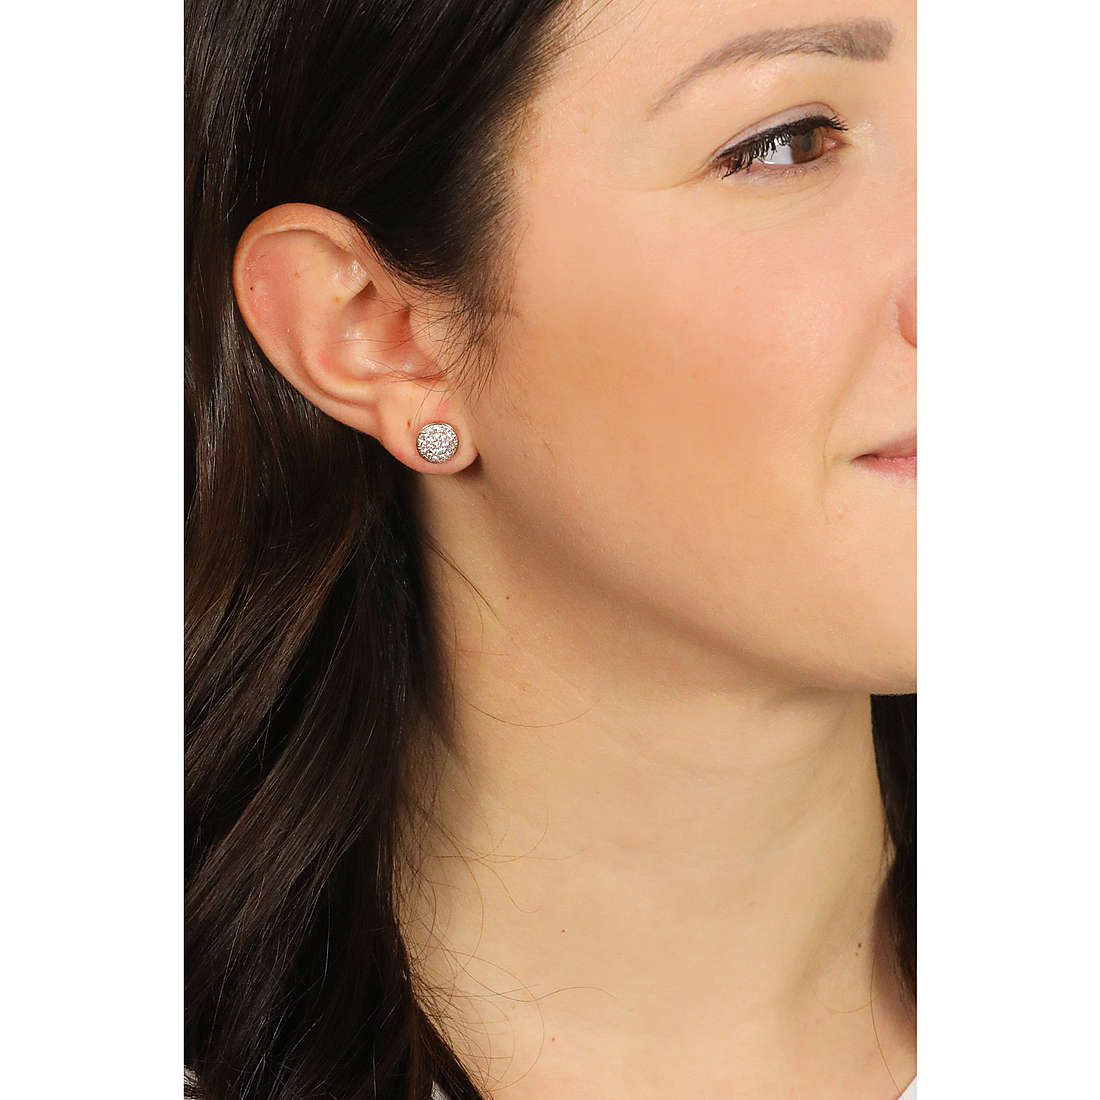 Bering earrings Arctic Symphony woman 708-37-05 wearing